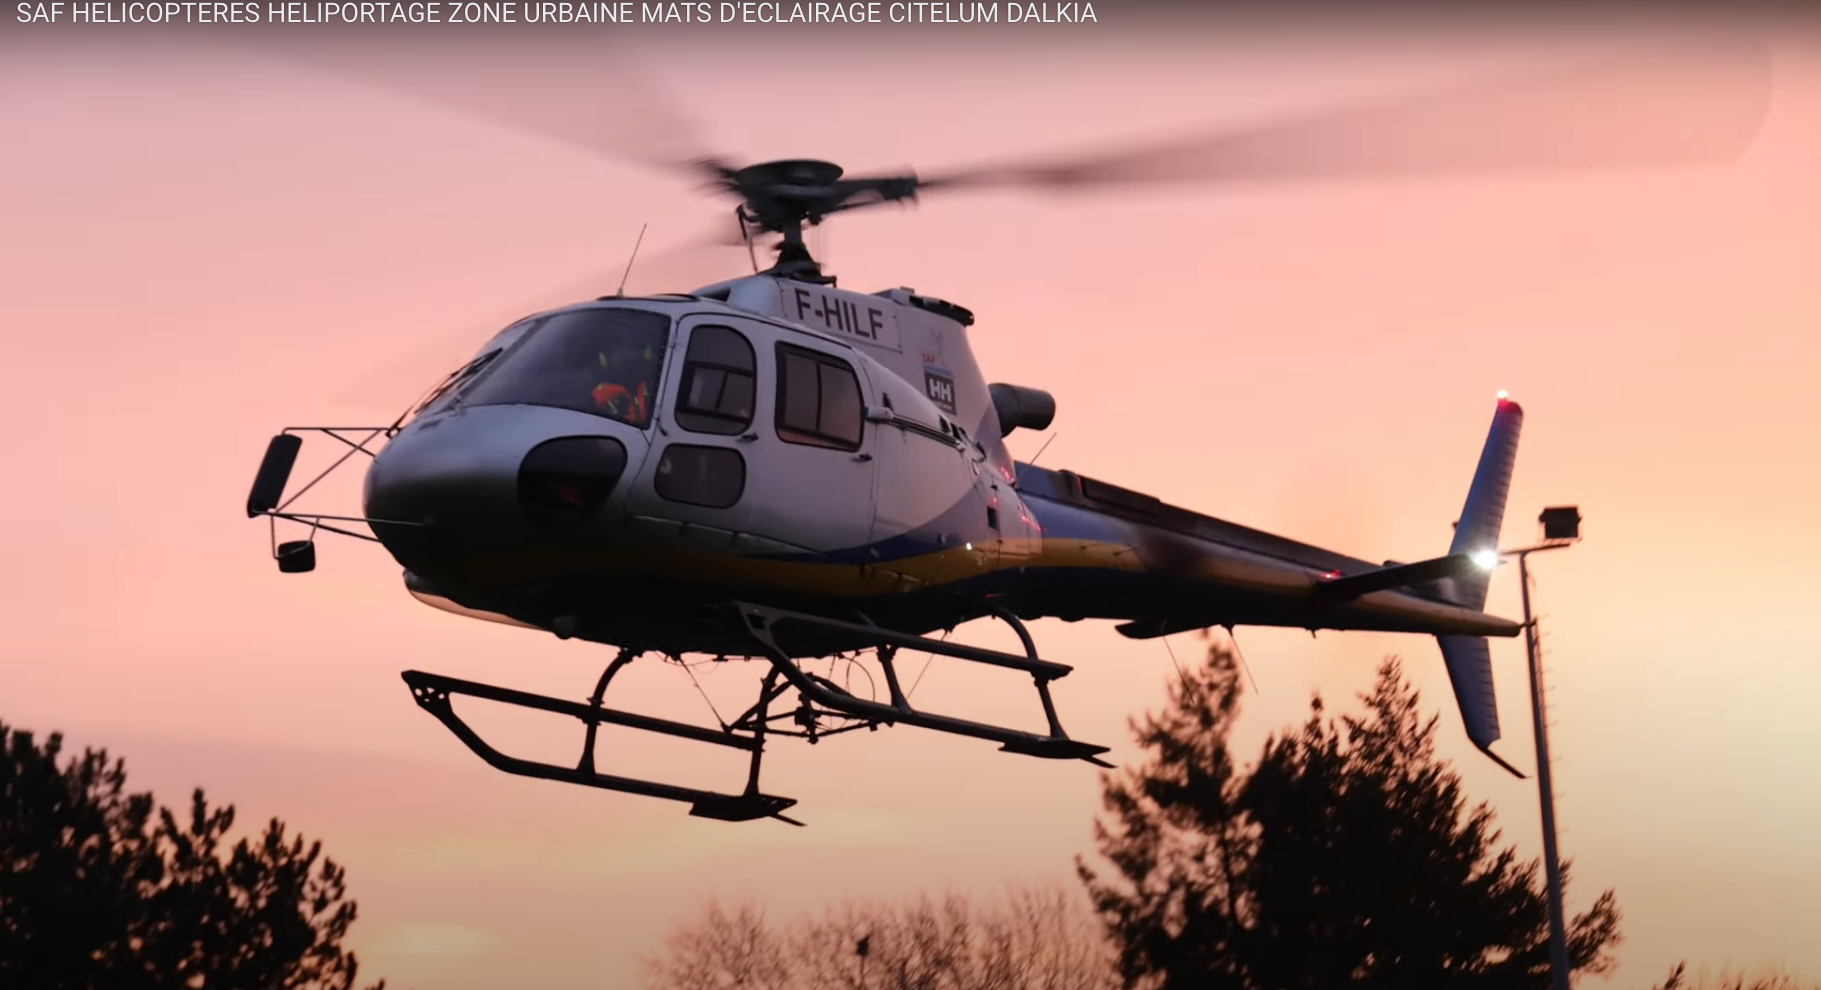 SAF HELICOPTERES HELIPORTAGE ZONE URBAINE MATS D'ECLAIRAGE CITELUM DALKIA